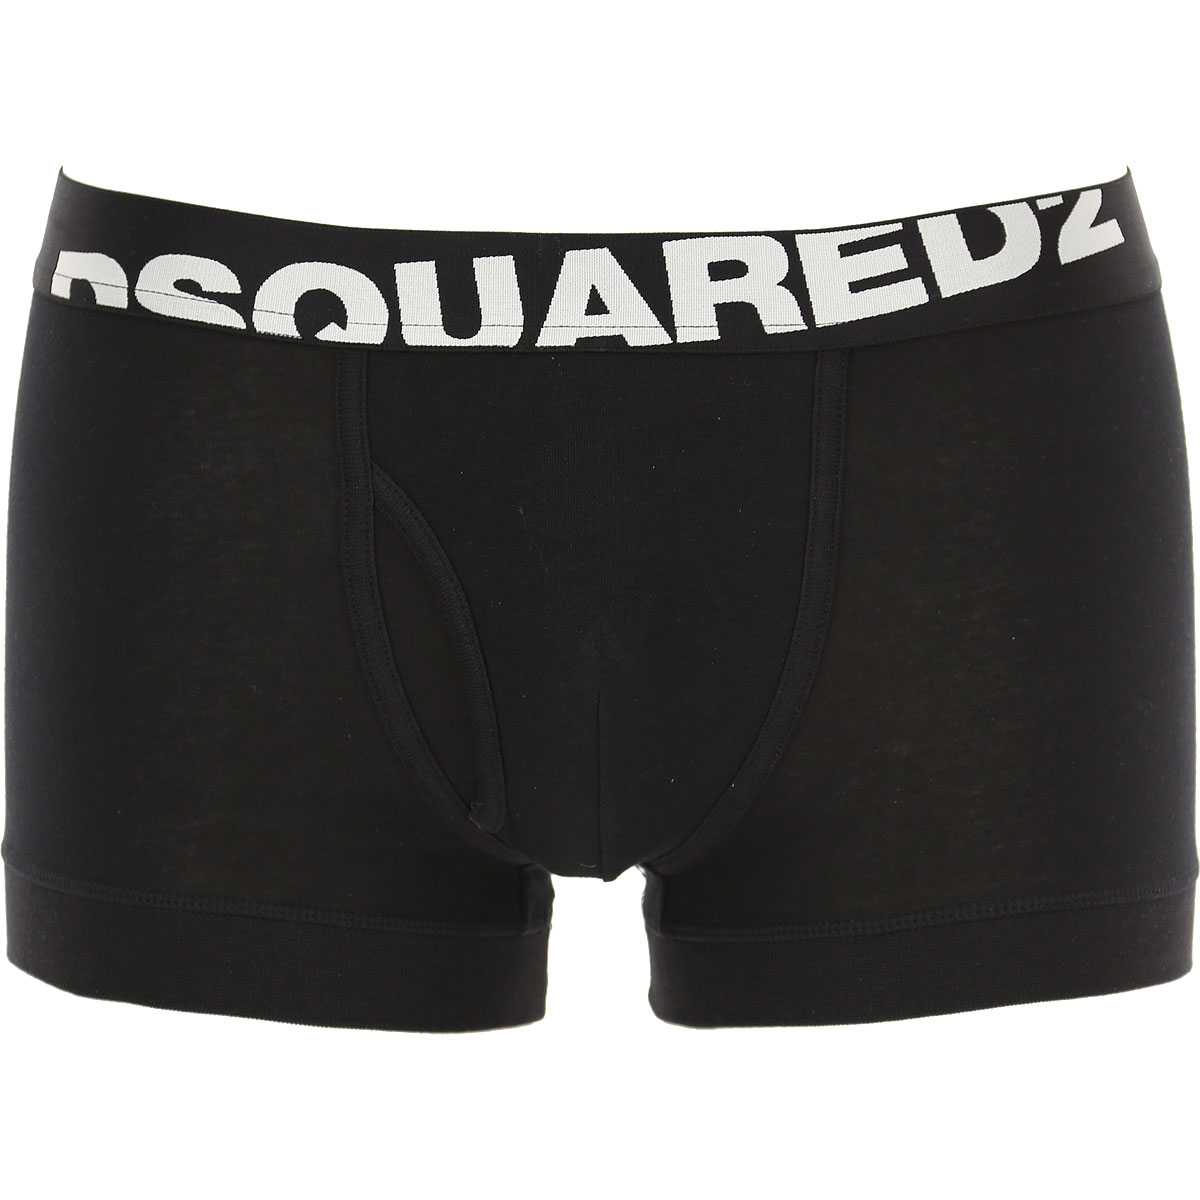 Mens Underwear Dsquared2, Style code: cont-dcxc90030-001